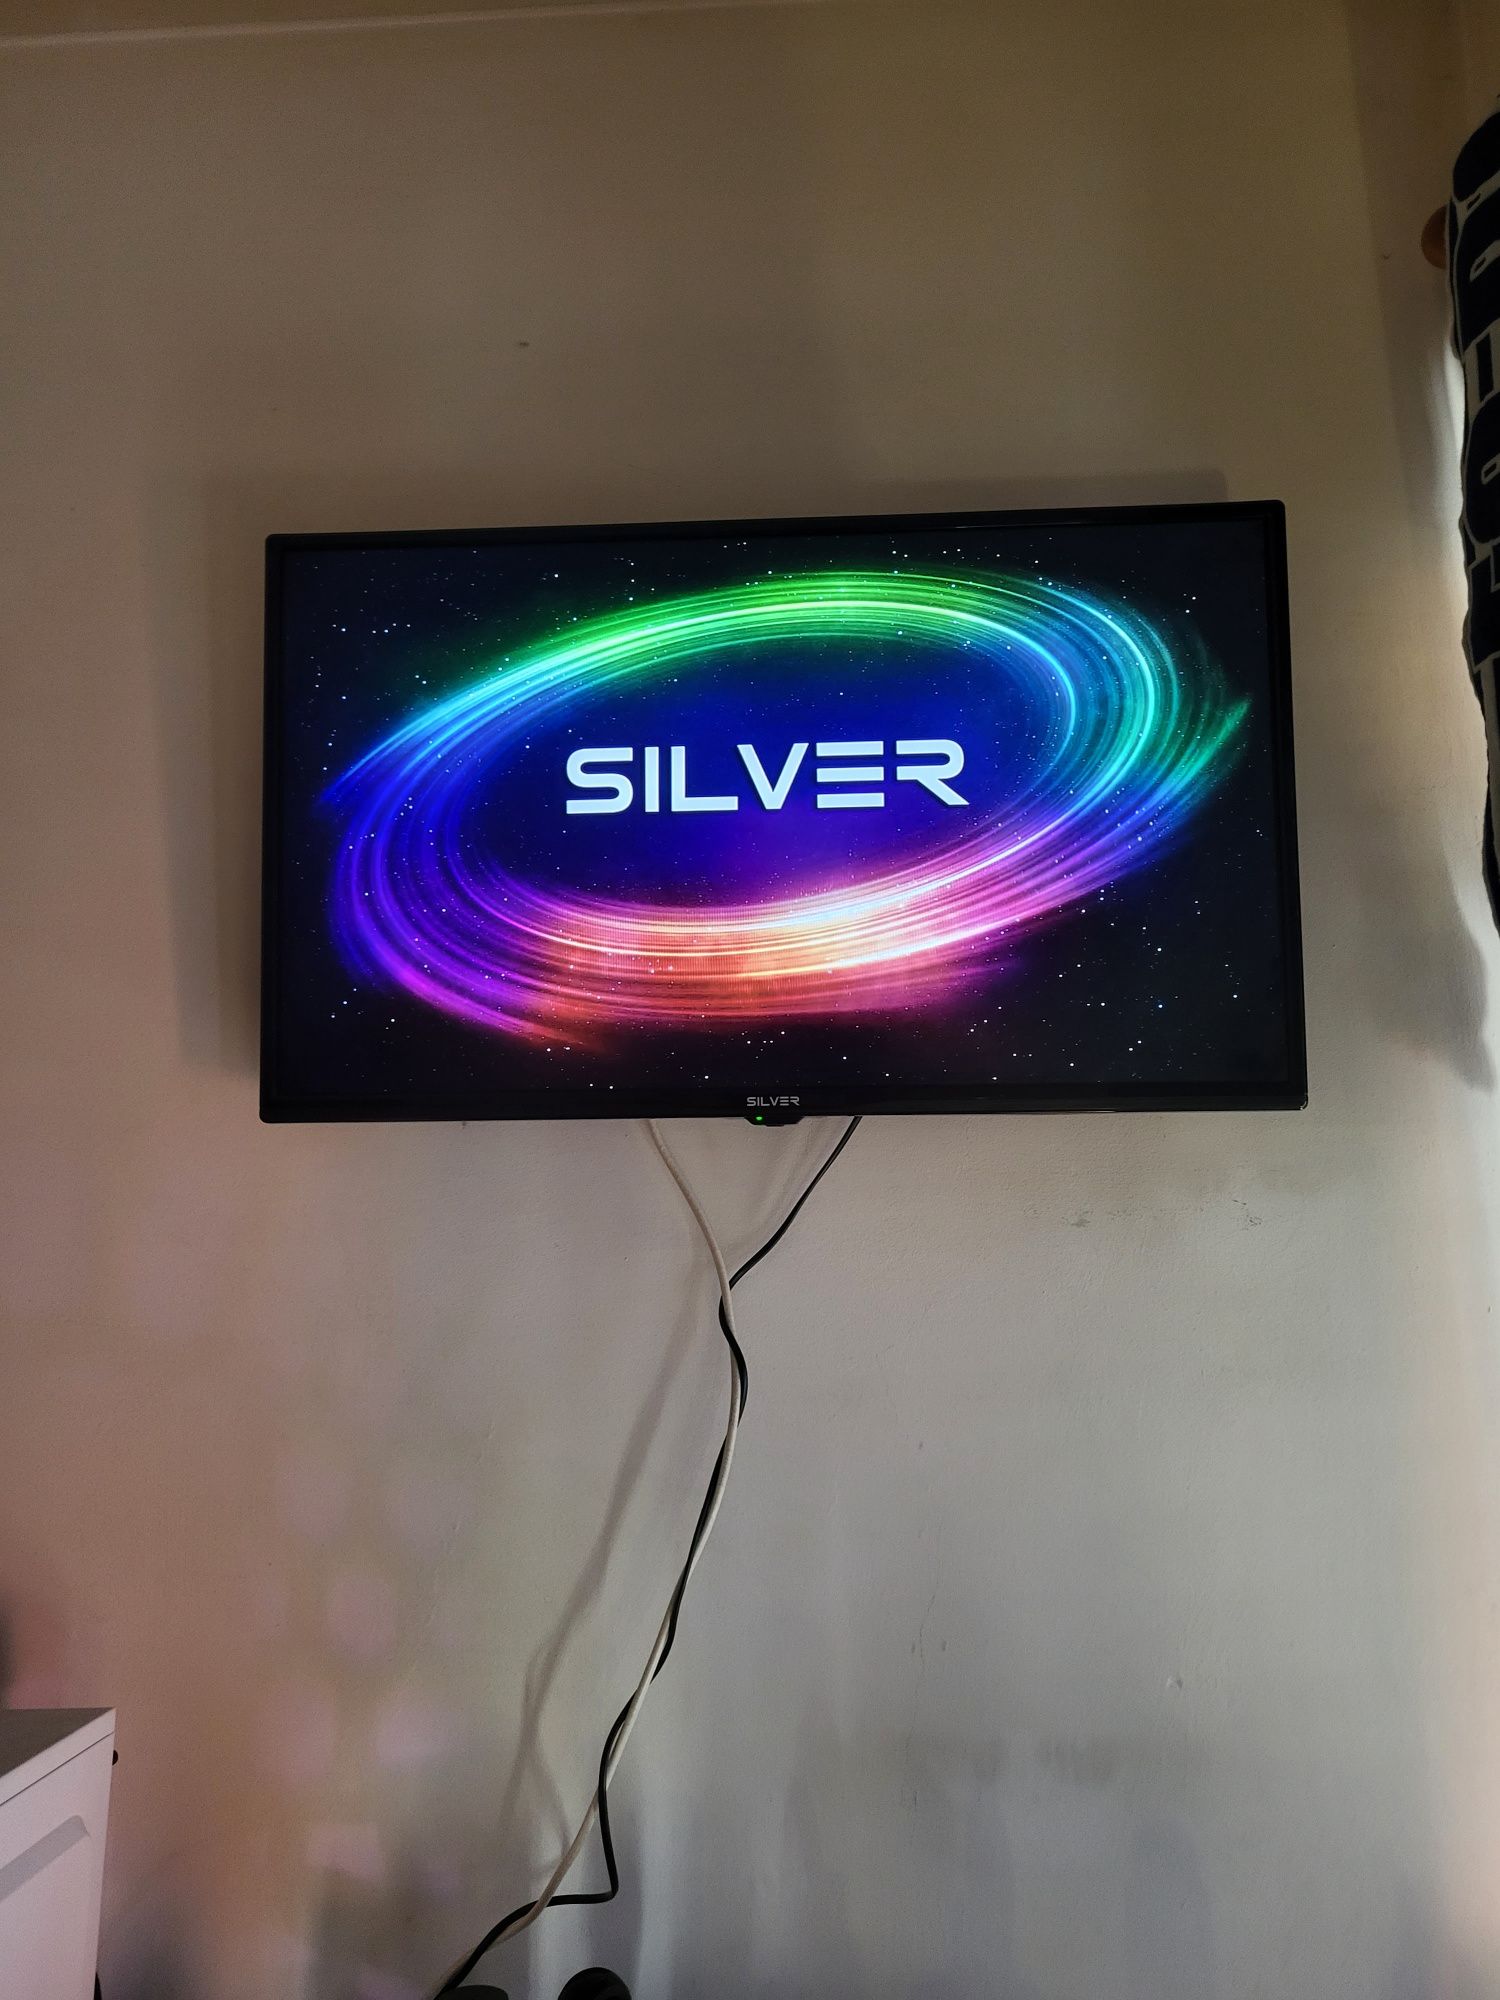 Vendo TV LCD 32 Polegadas , Silver